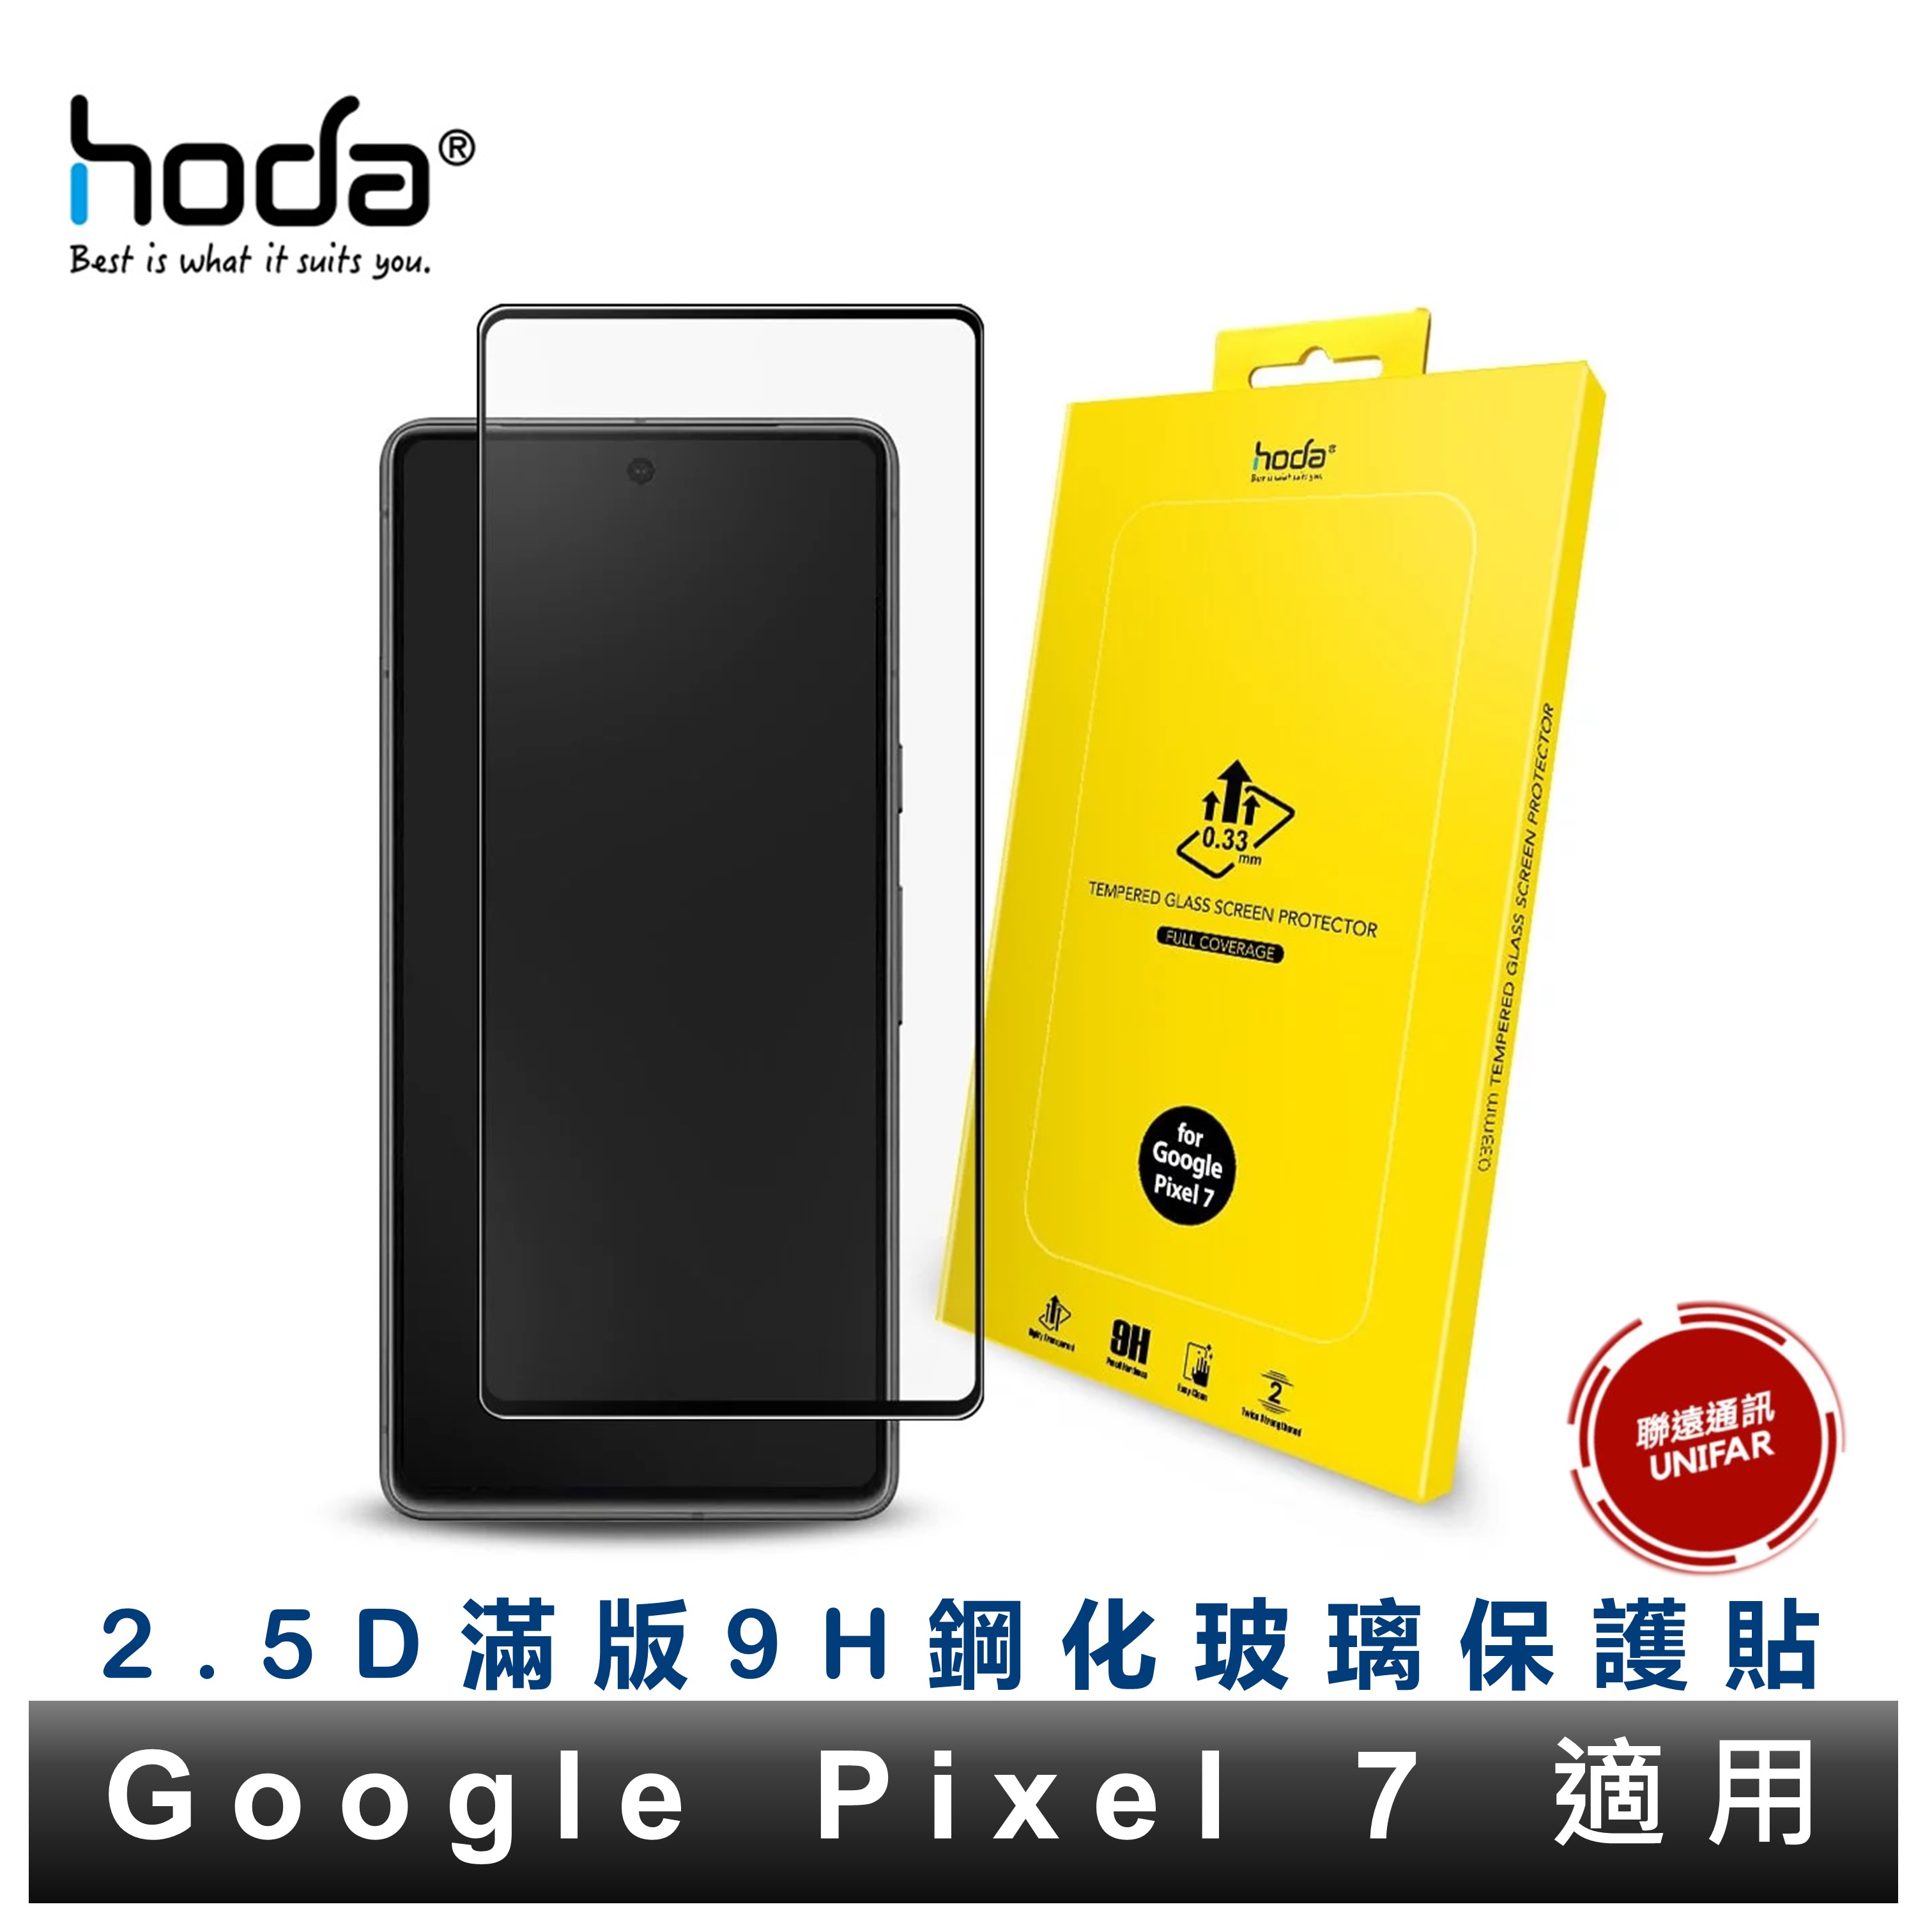 hoda【Google Pixel 7】2.5D隱形滿版高透光9H鋼化玻璃保護貼